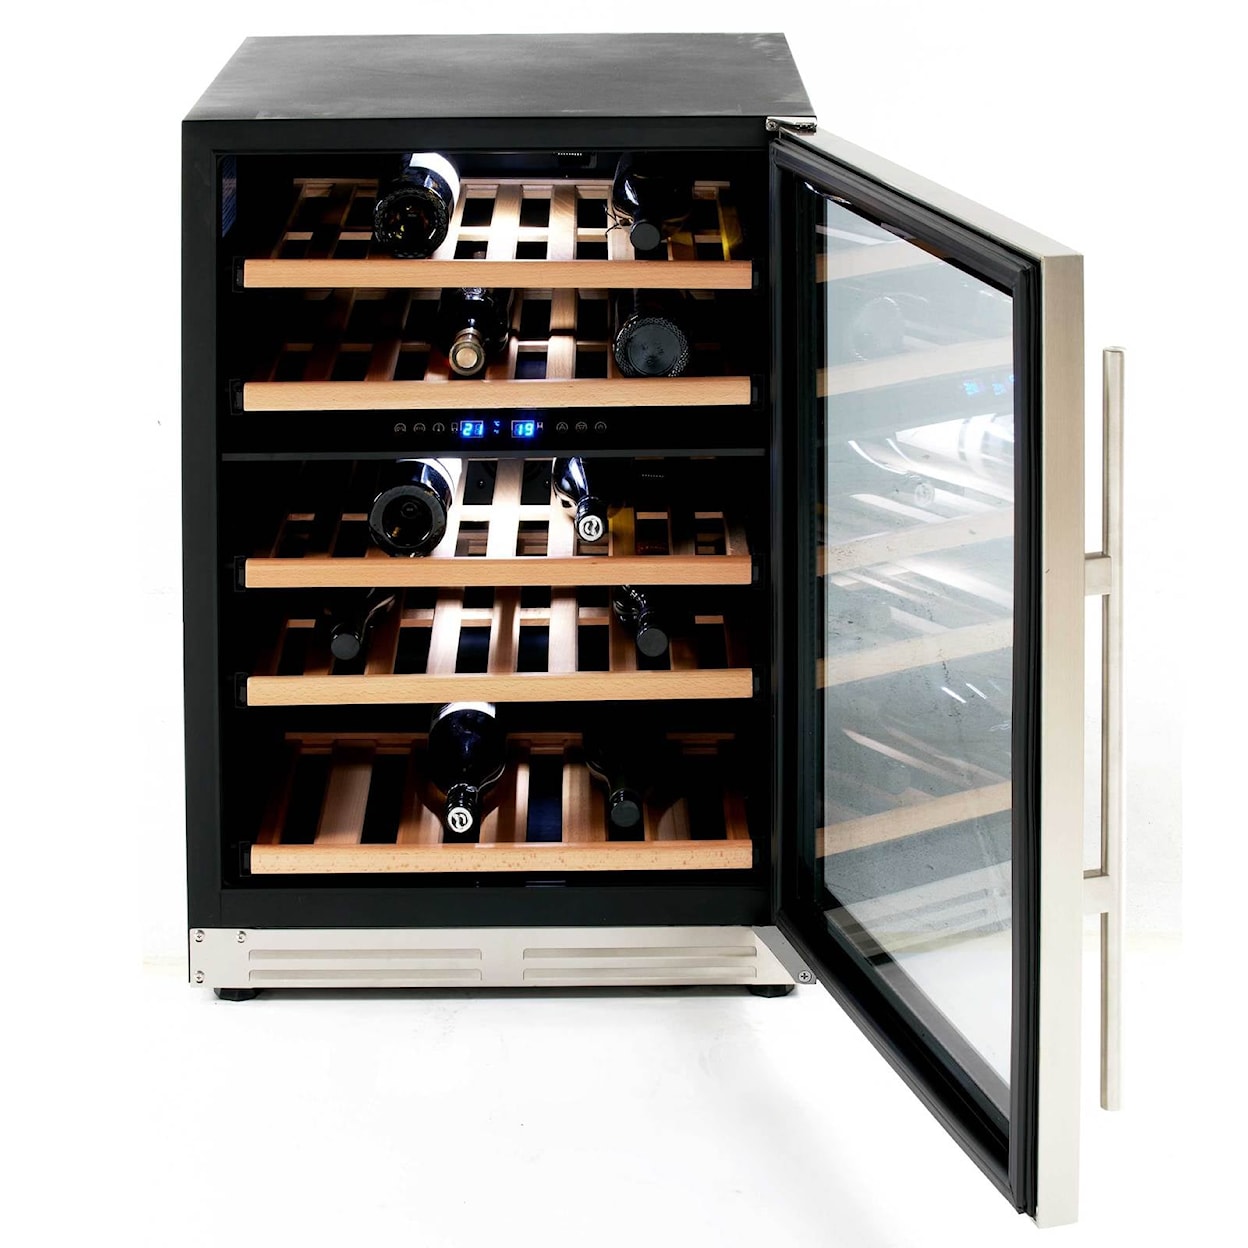 Avanti Refrigerators Refrigerator - Wine Cooler